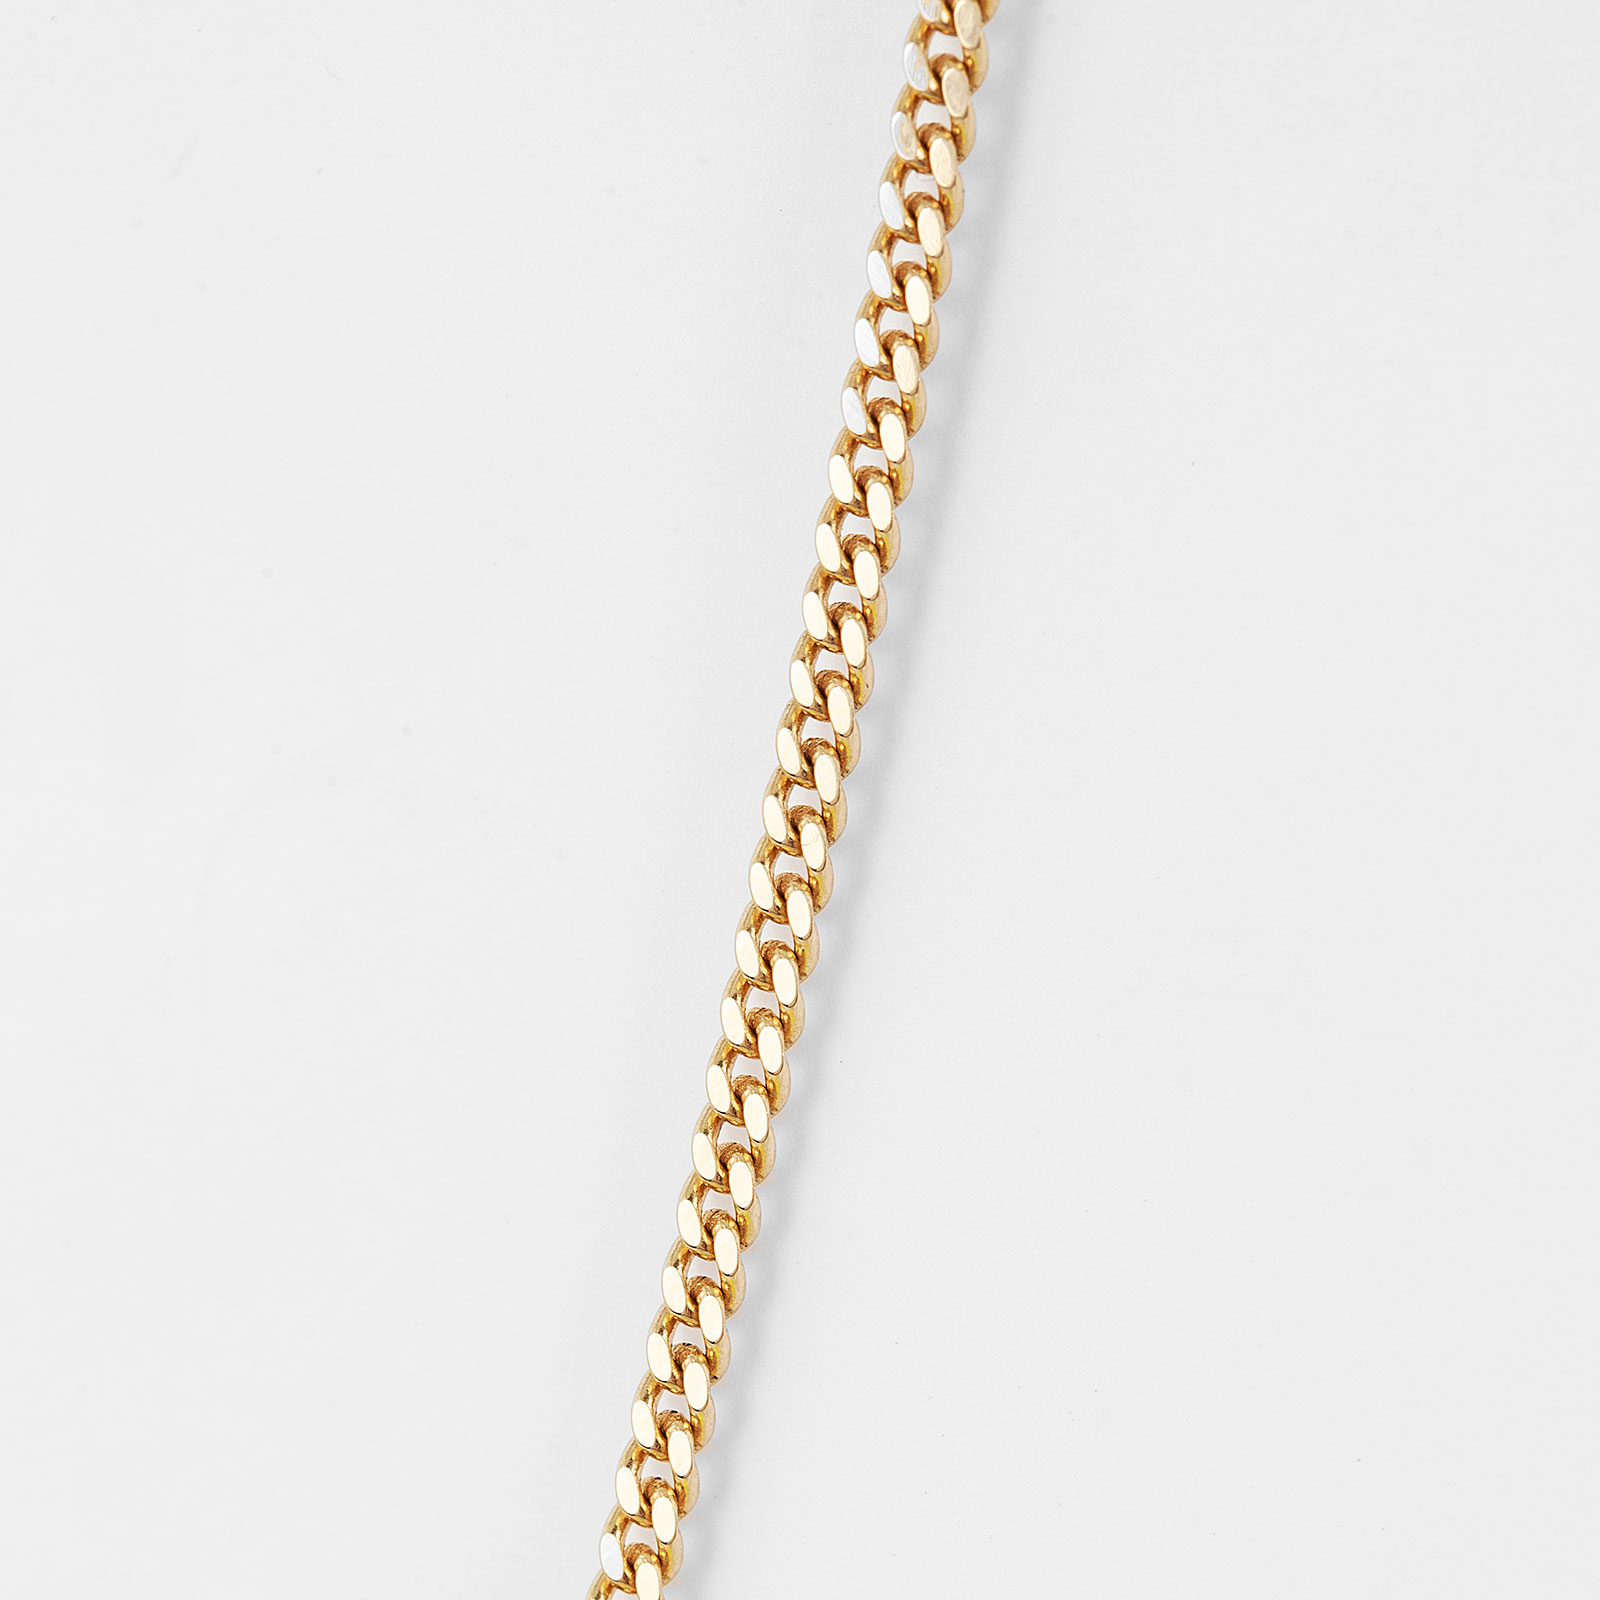 Halsband 18k guld - pansarkedja 50 cm